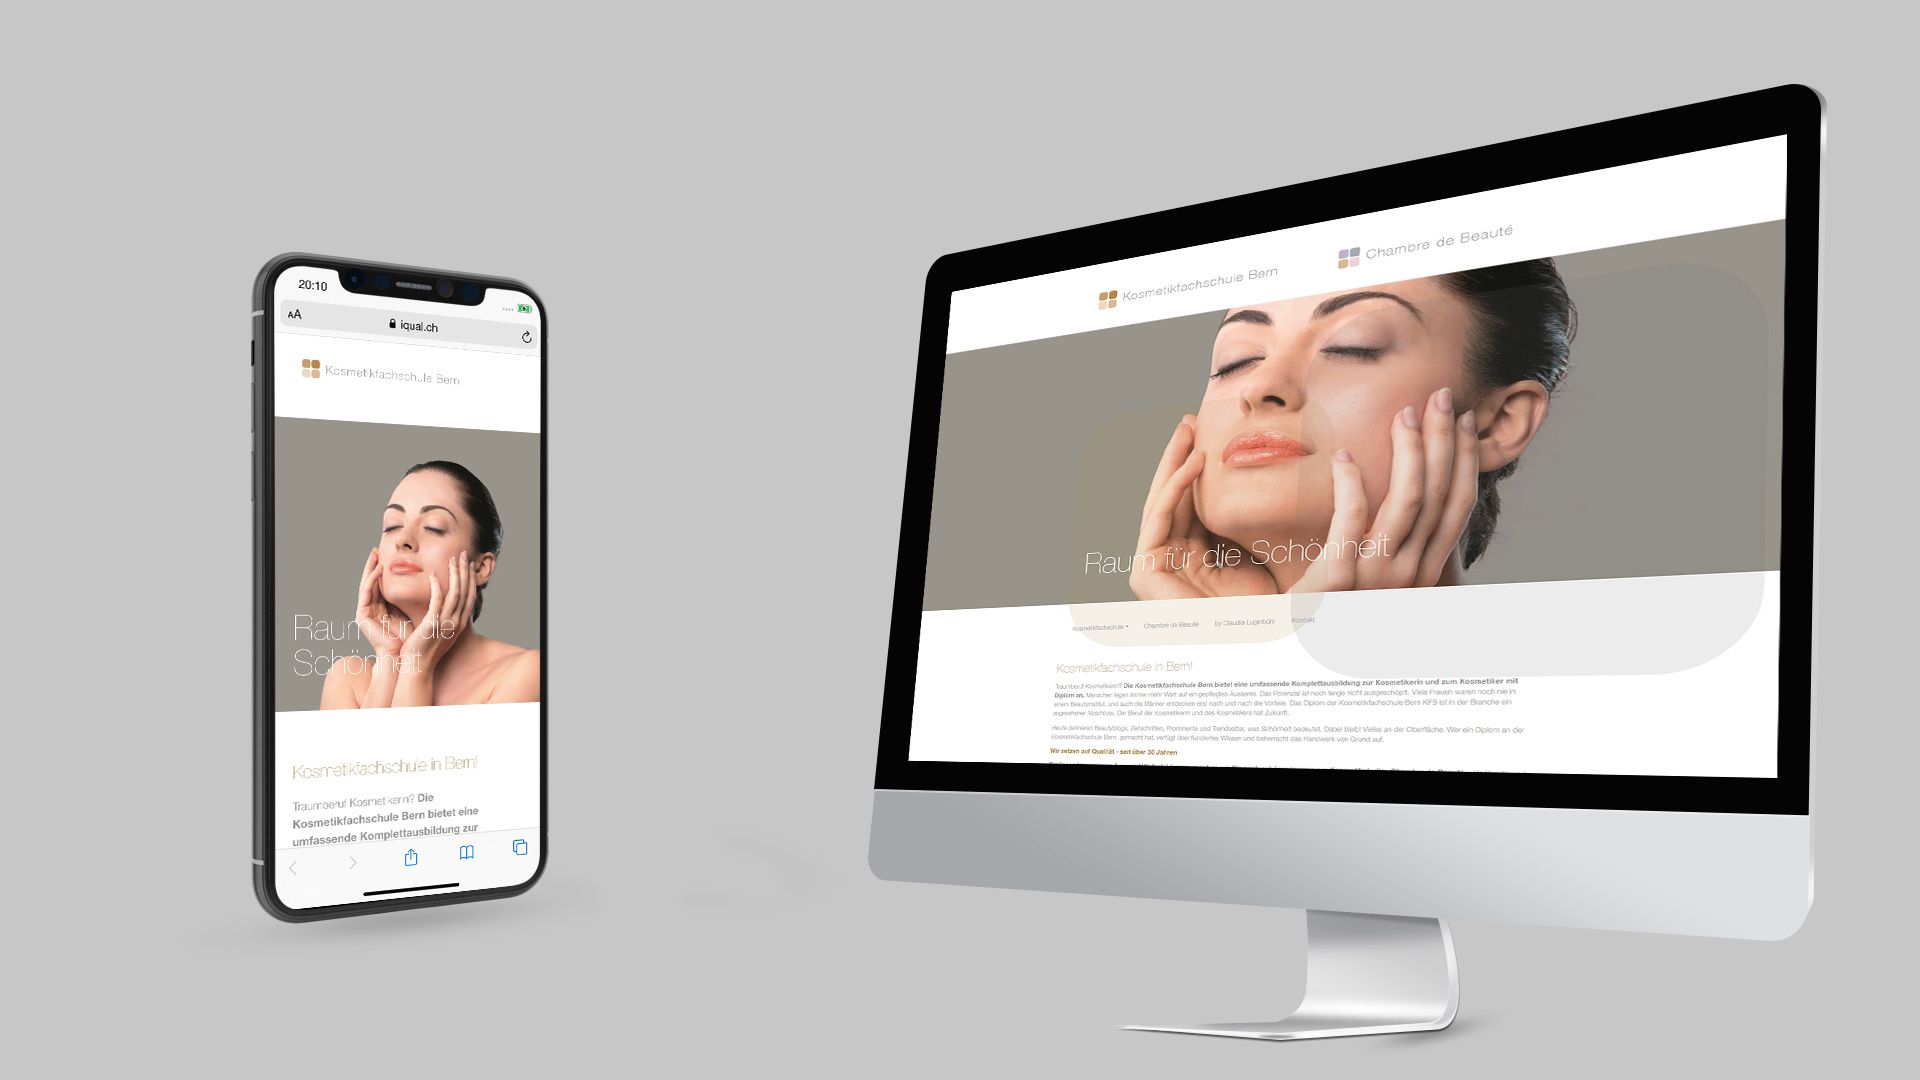 Kosmetikfachschule Bern: Online Vermarktung